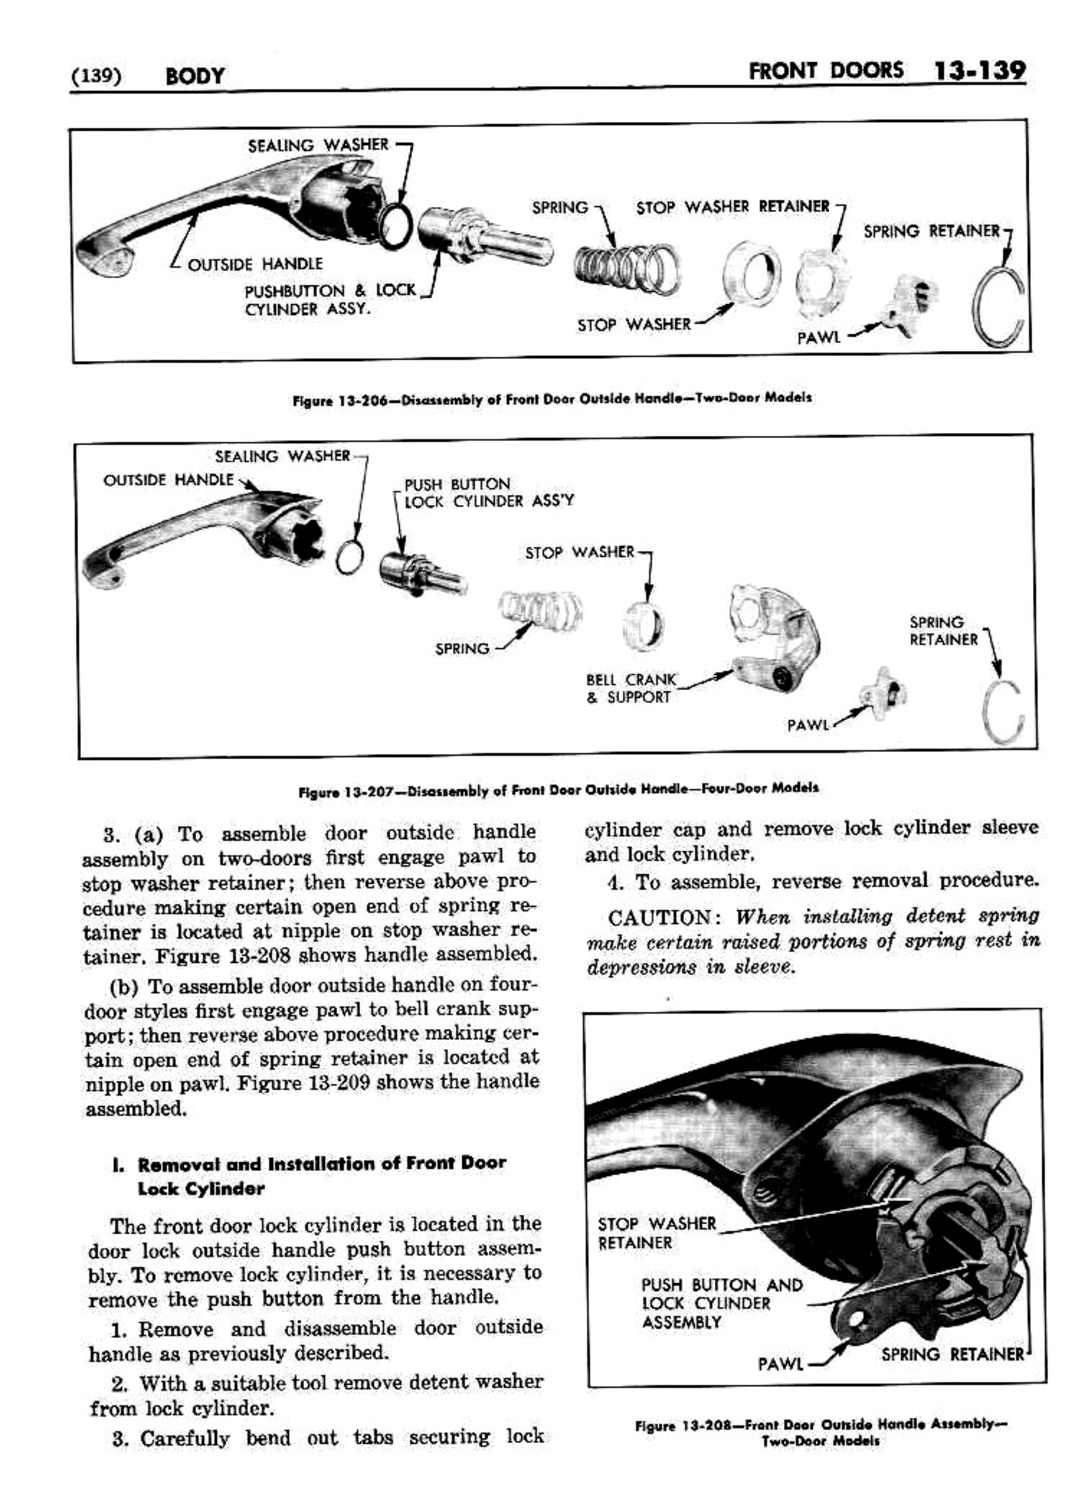 n_1958 Buick Body Service Manual-140-140.jpg